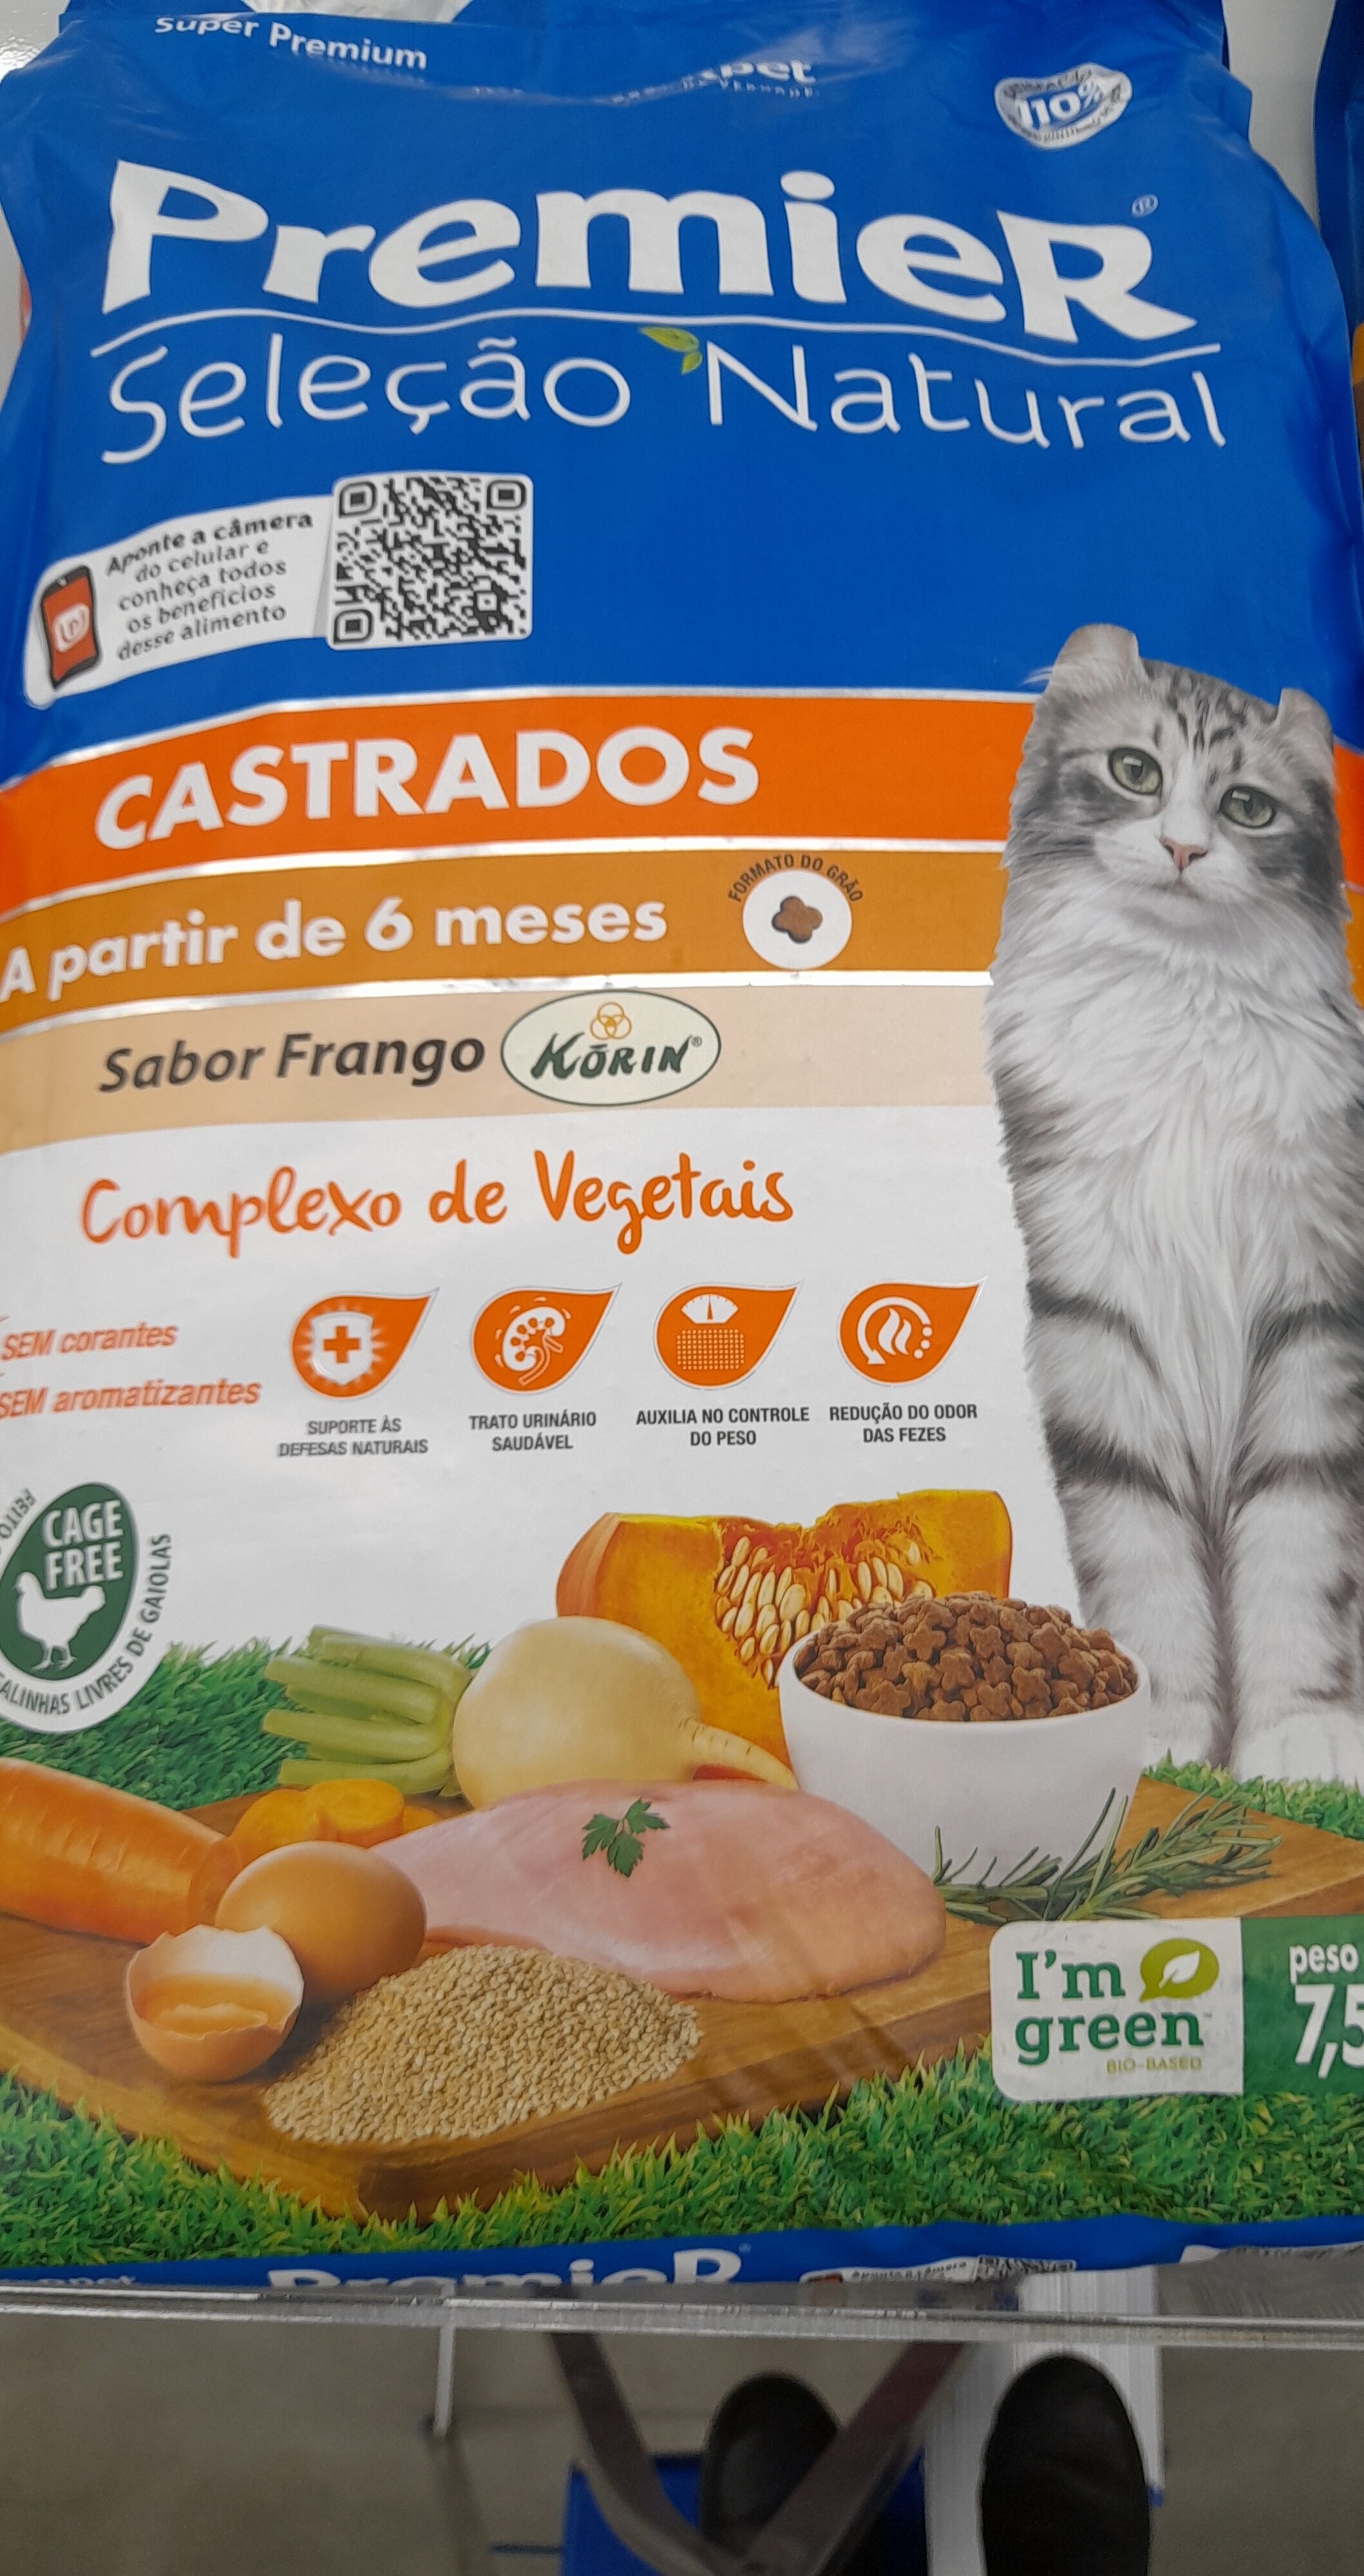 Premier gatos sel.nat.ad cast frango - Product - pt